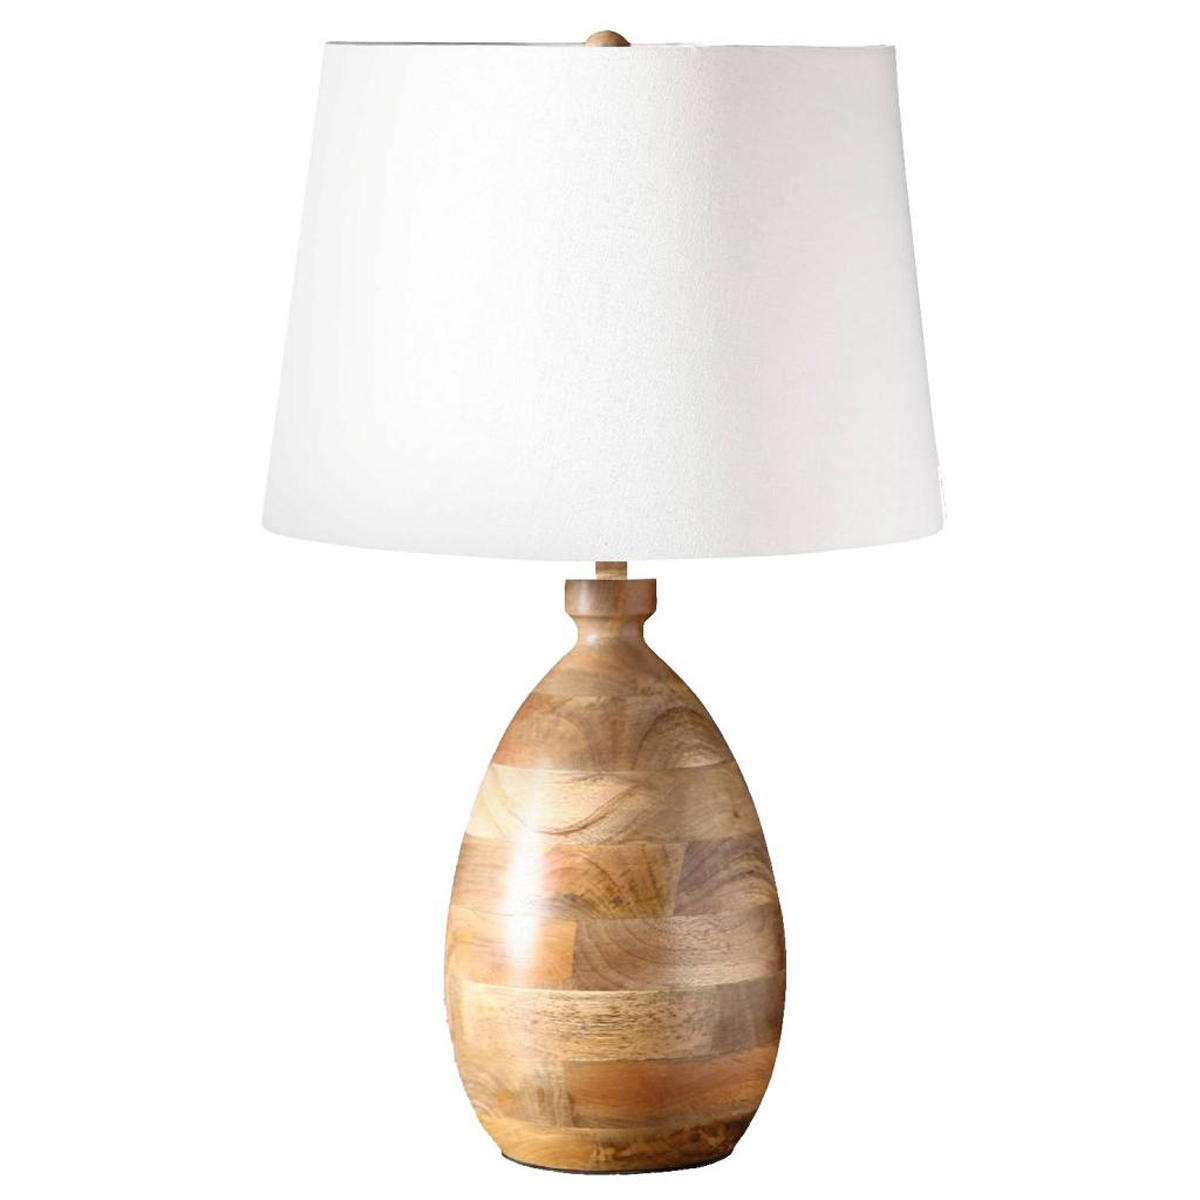 Ren-Wil Agathe Table Lamp - Natural wood